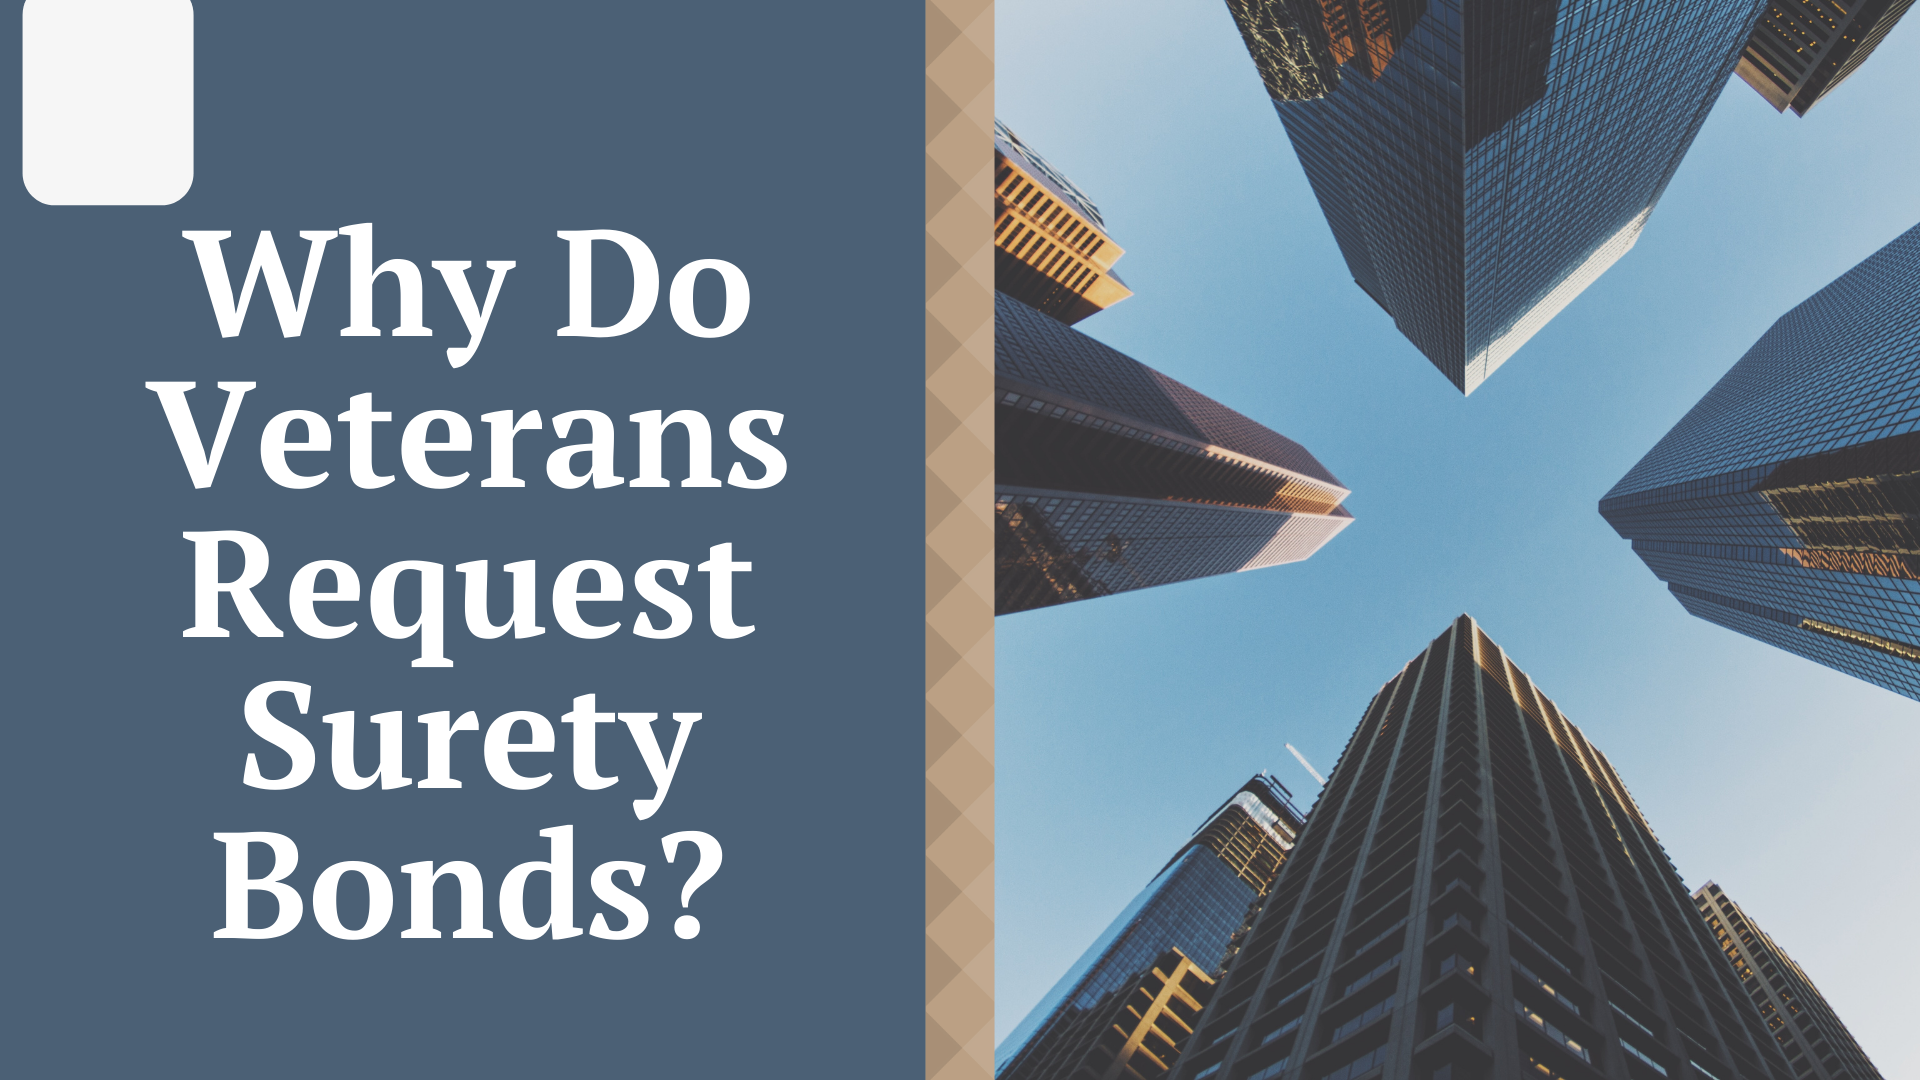 surety bond - Why do veterans request a surety bond - buildings